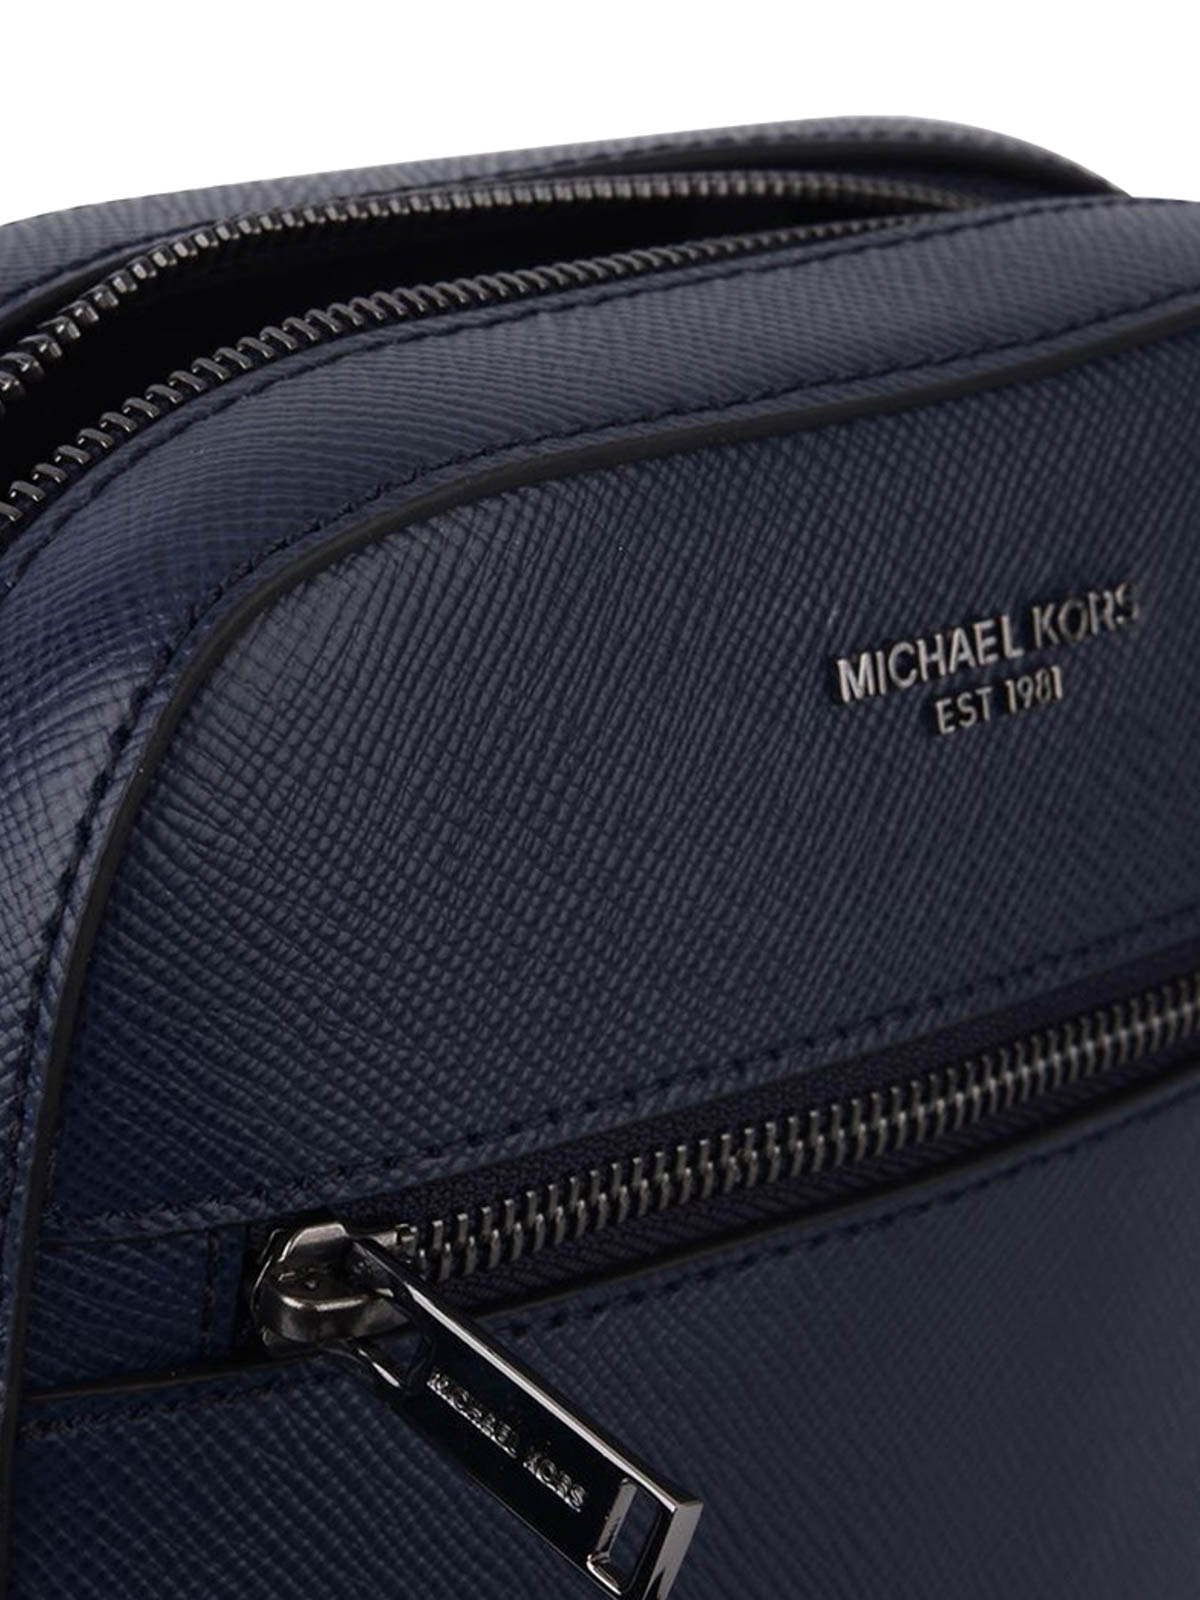 Michael Kors Harrison Large Leather Tote Bag